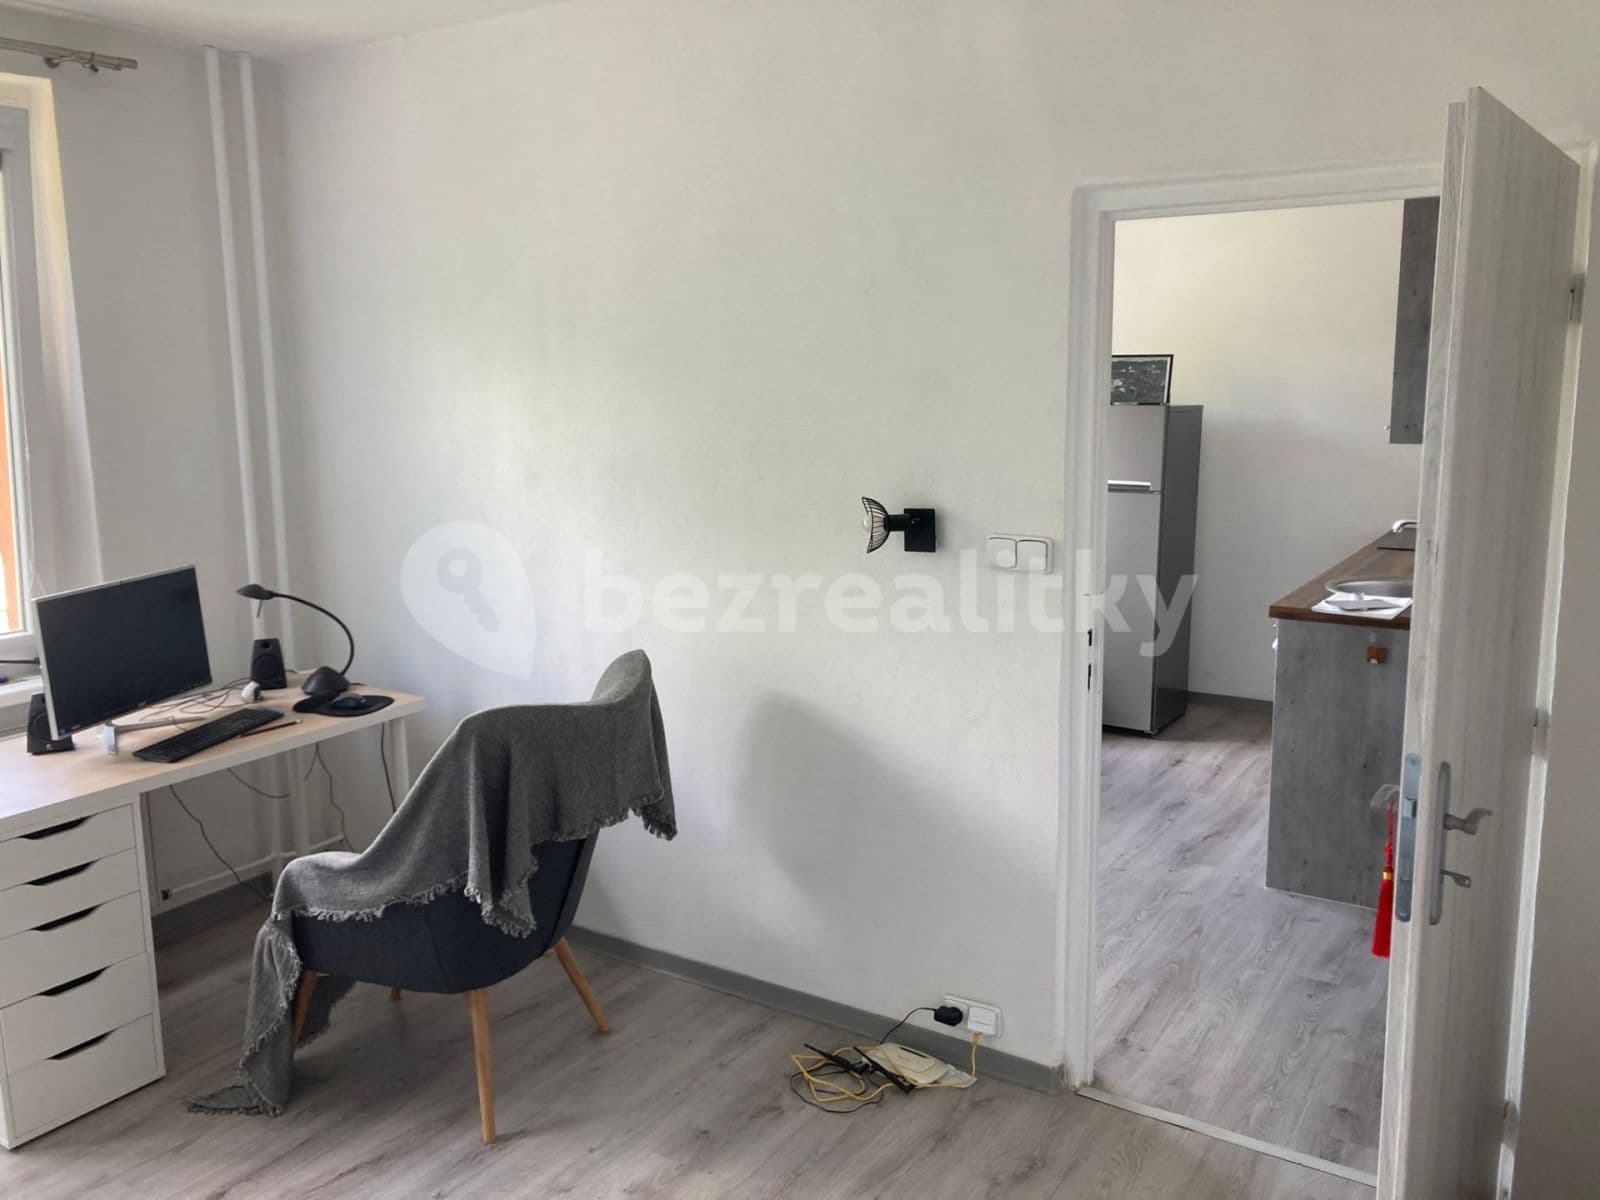 1 bedroom with open-plan kitchen flat to rent, 45 m², Pavlovská, Prague, Prague